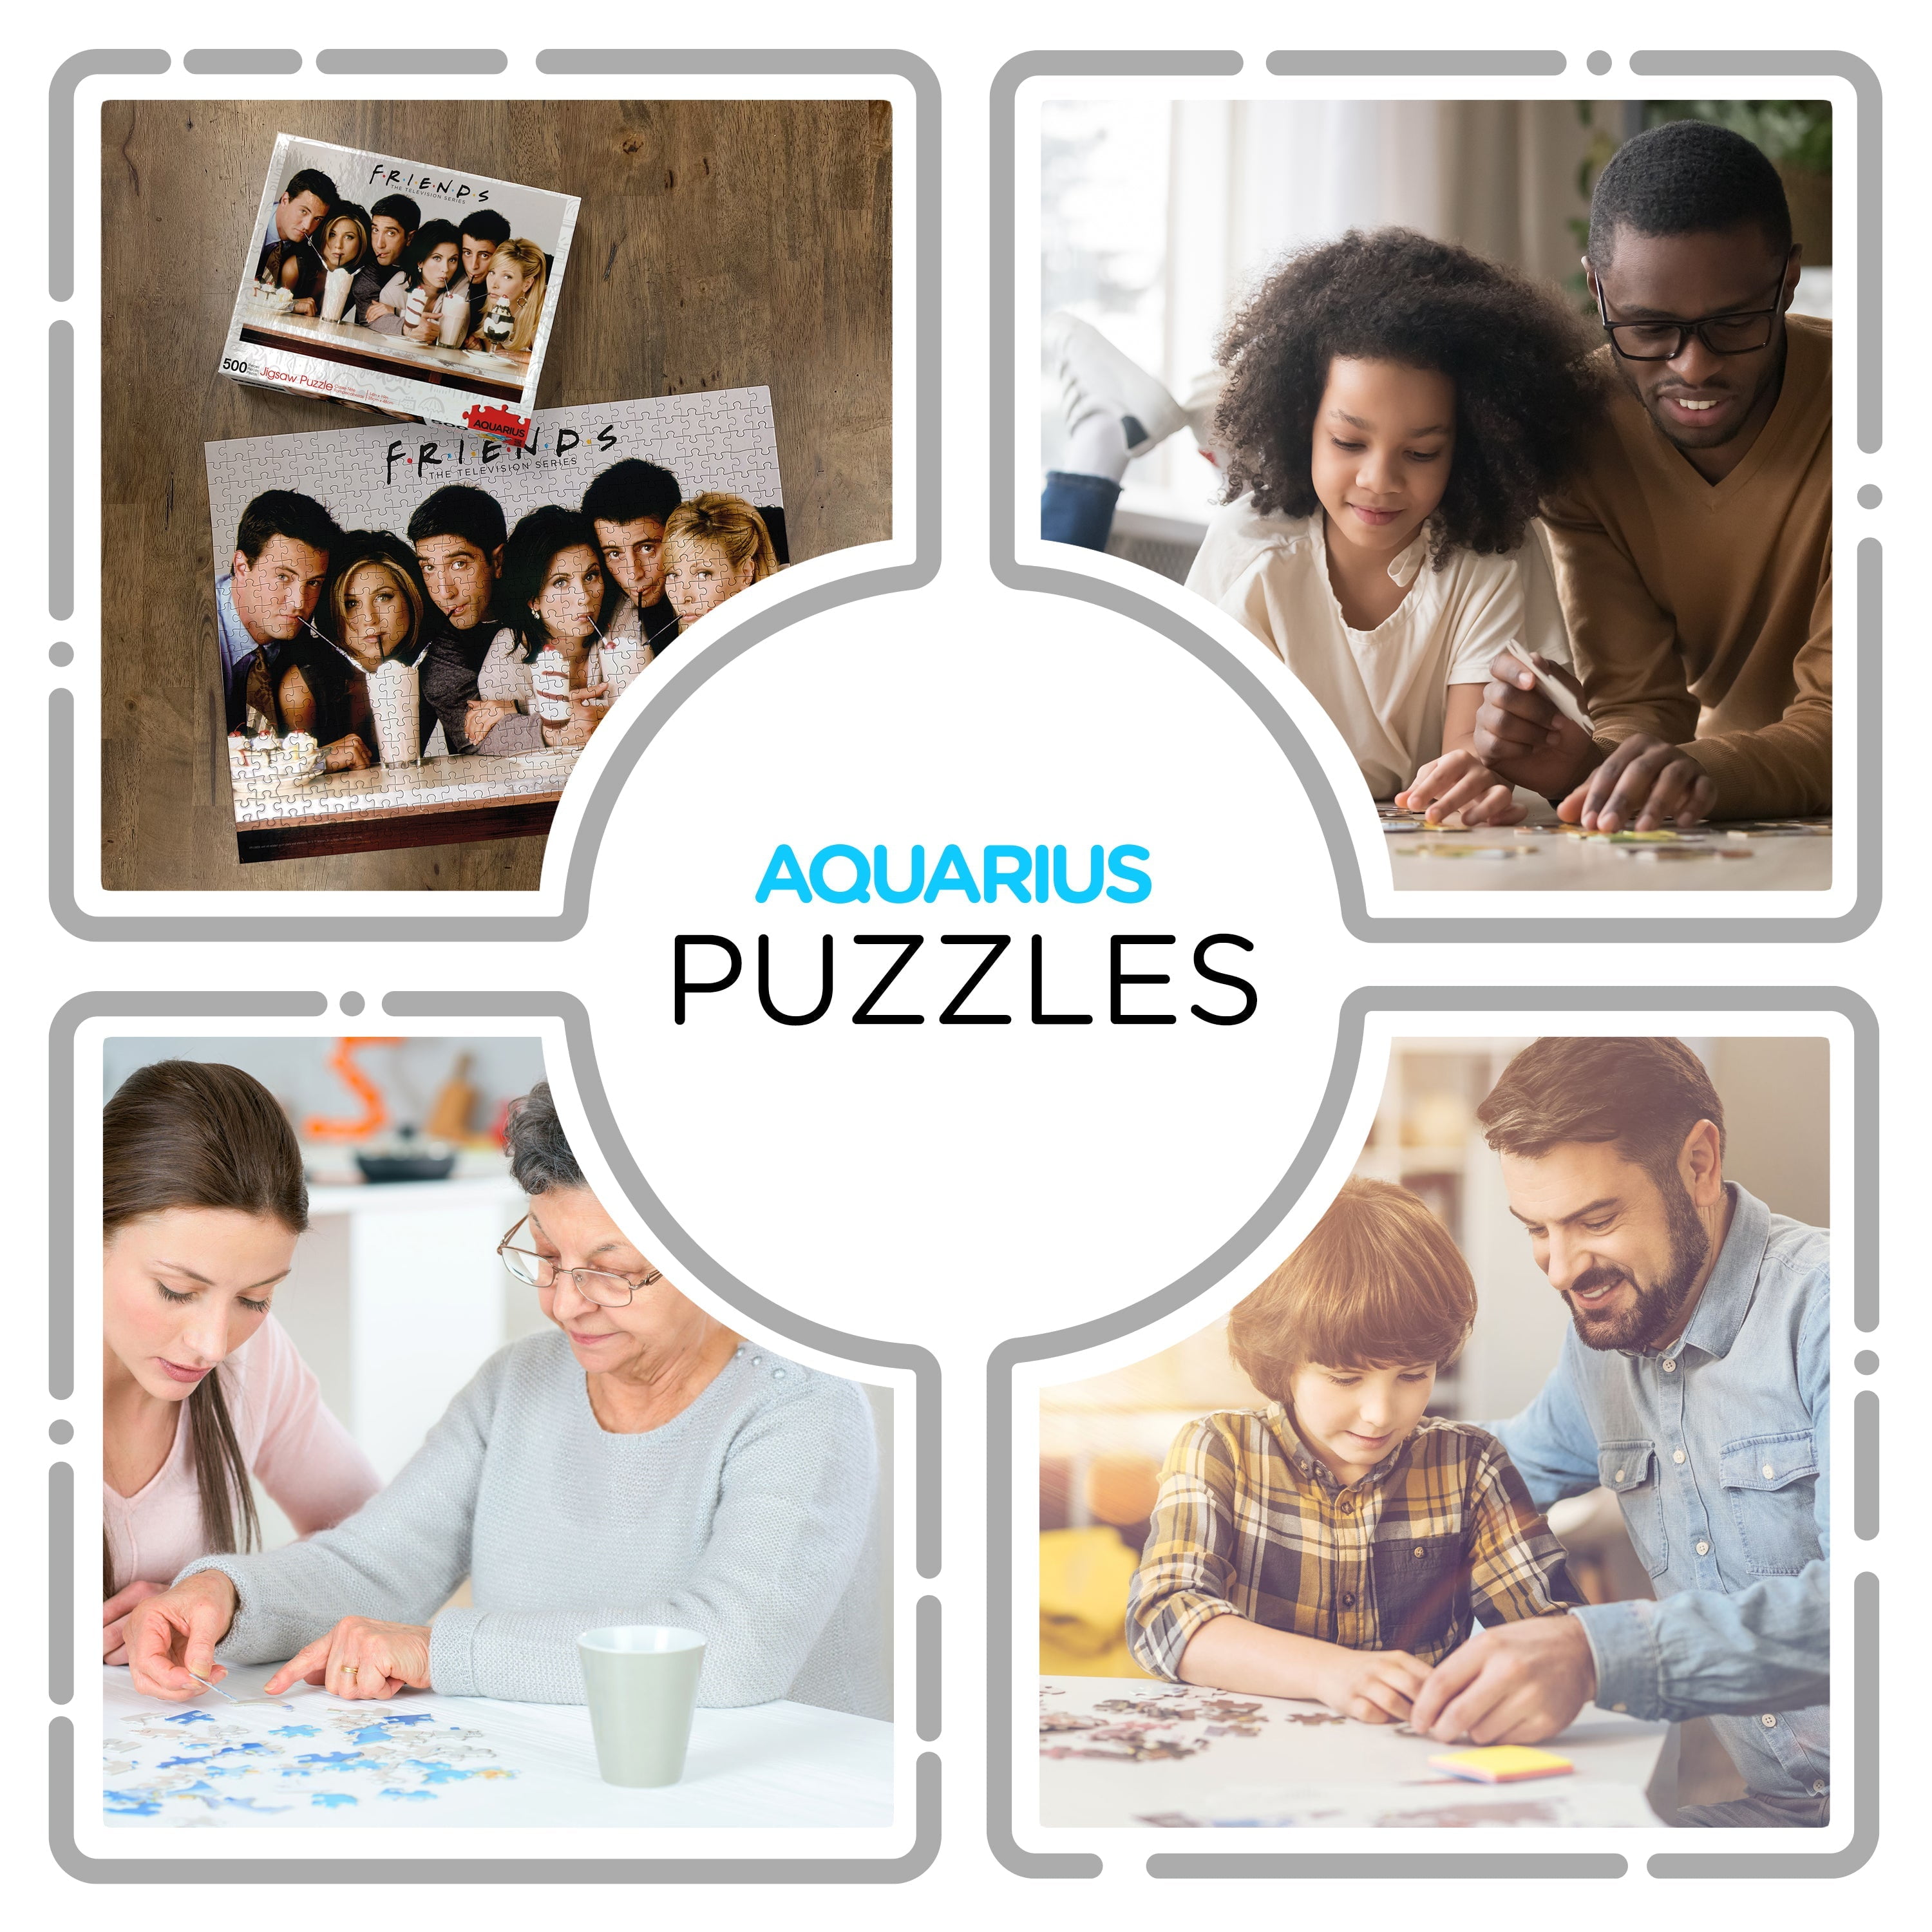 Friends TV Series Milkshake 500 Piece Jigsaw Puzzle